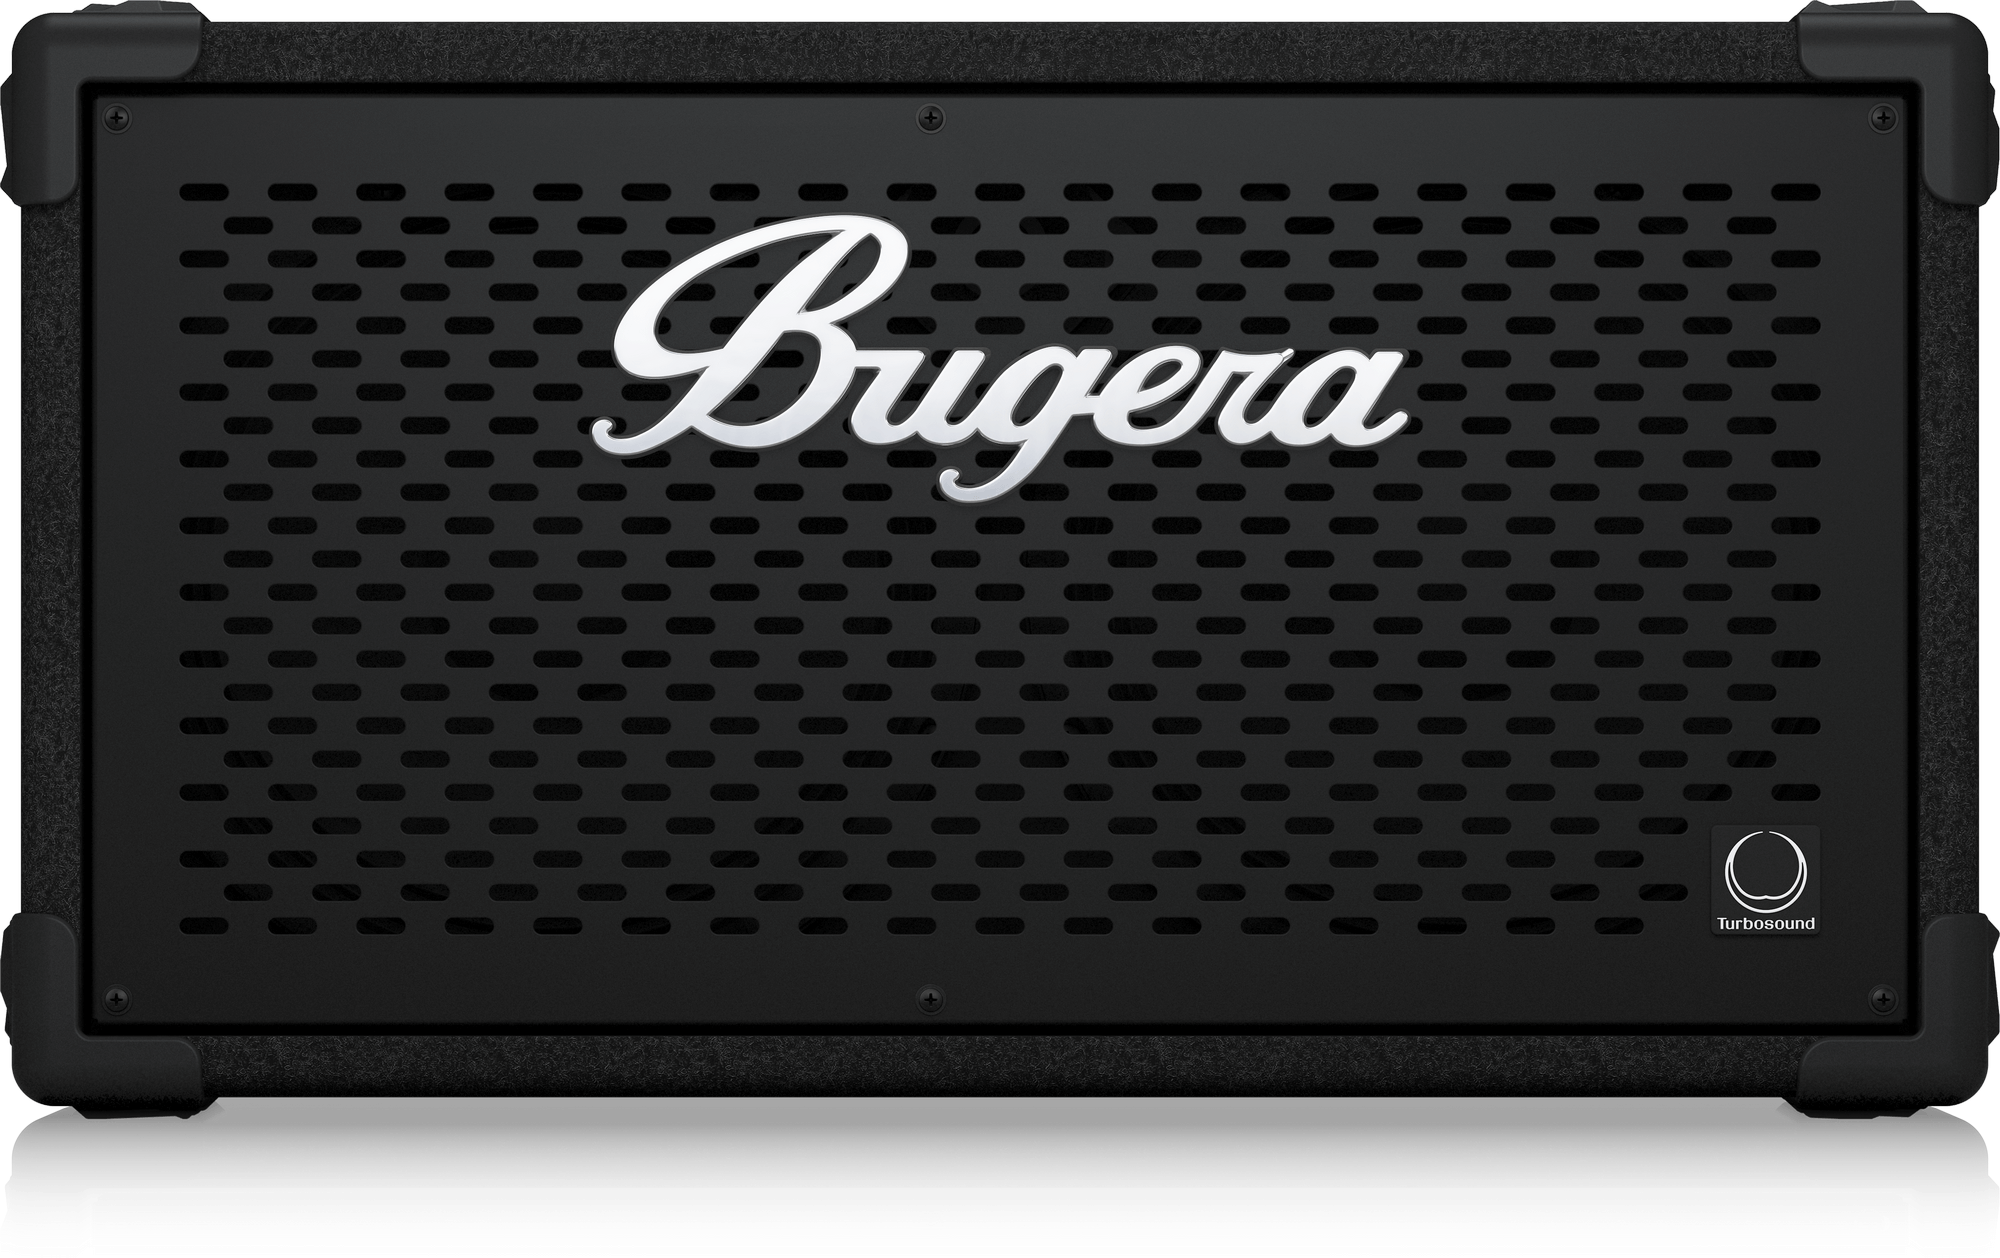 bugera bass speakers